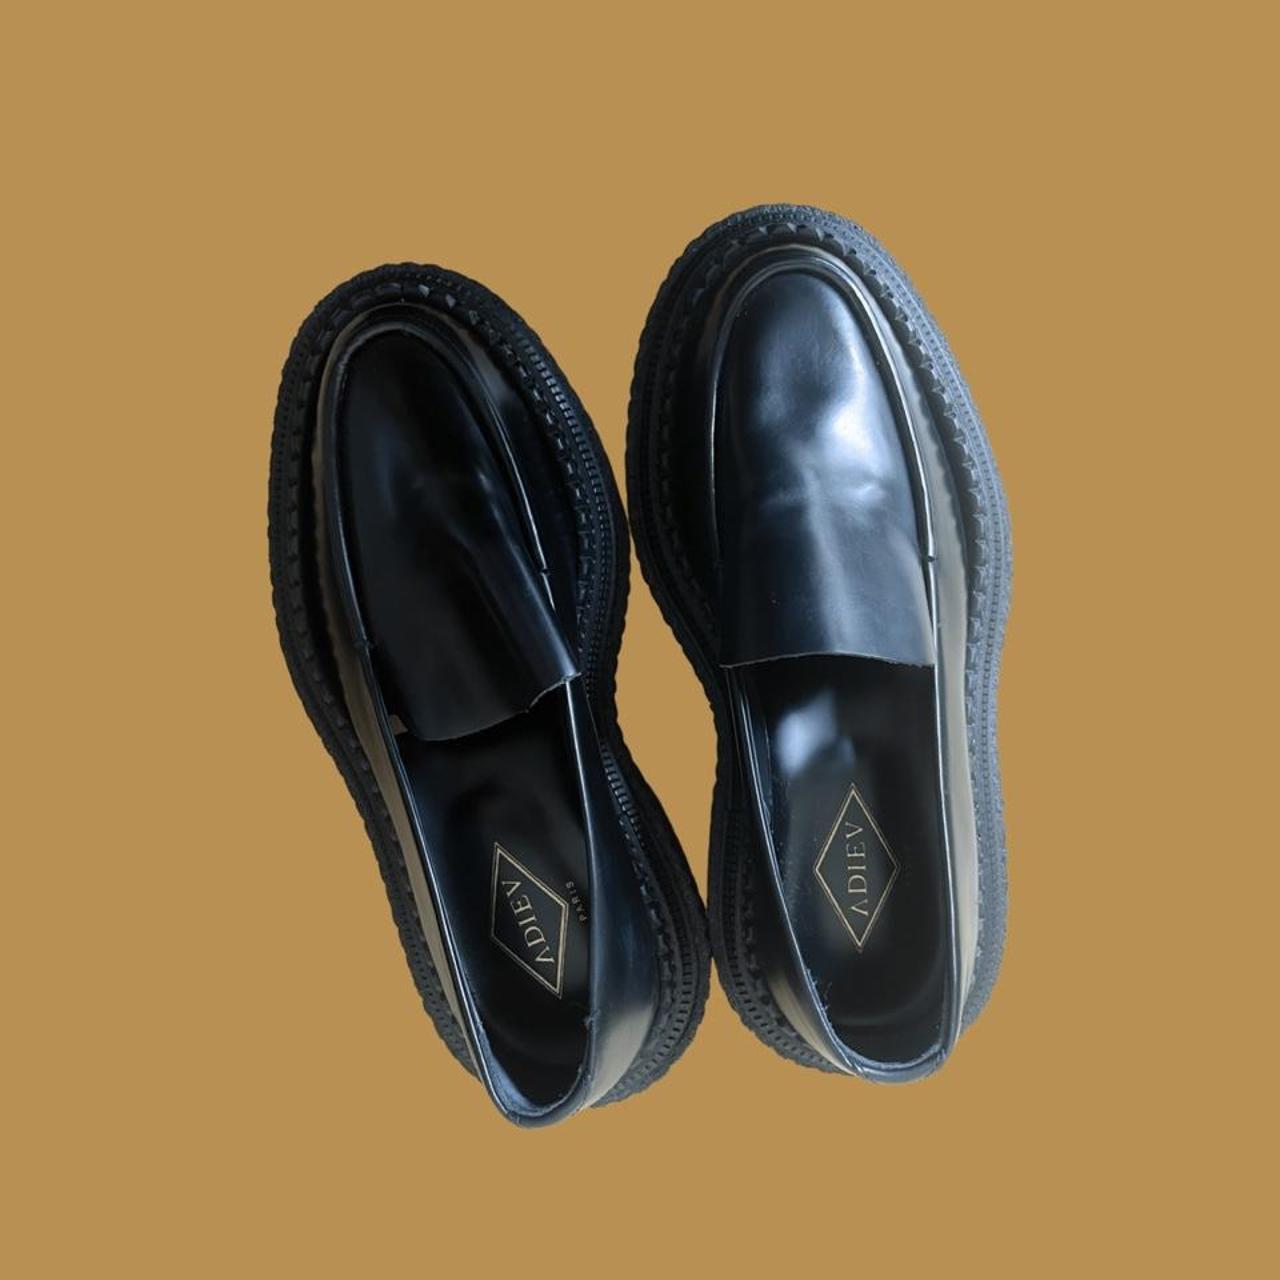 Adieu Women's Black Loafers